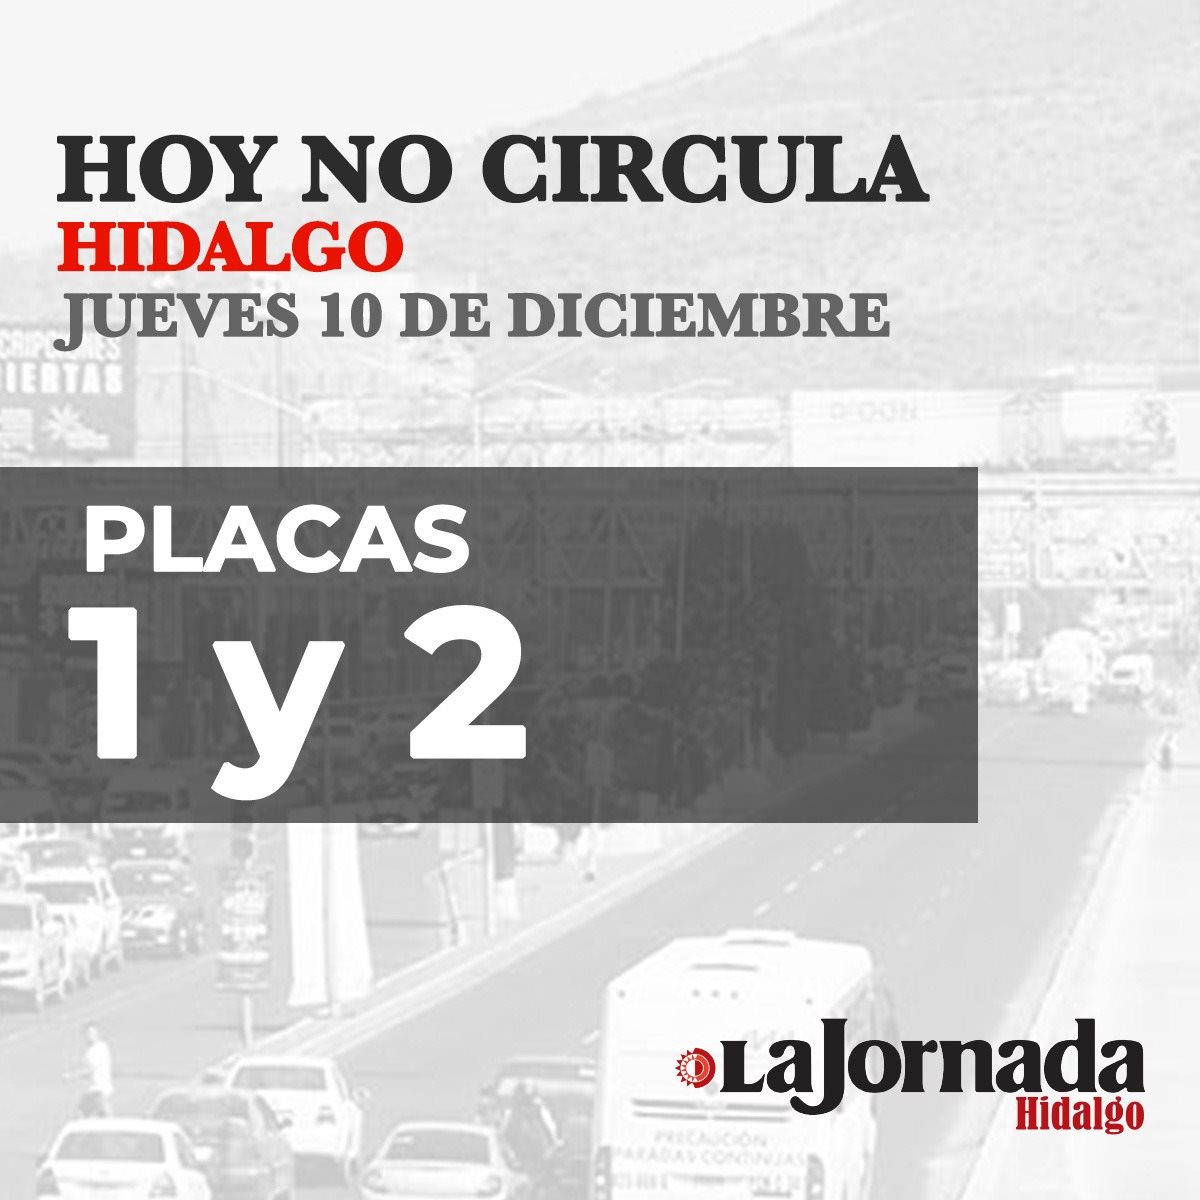 Hoy No Circula Hidalgo 10 diciembre 2020